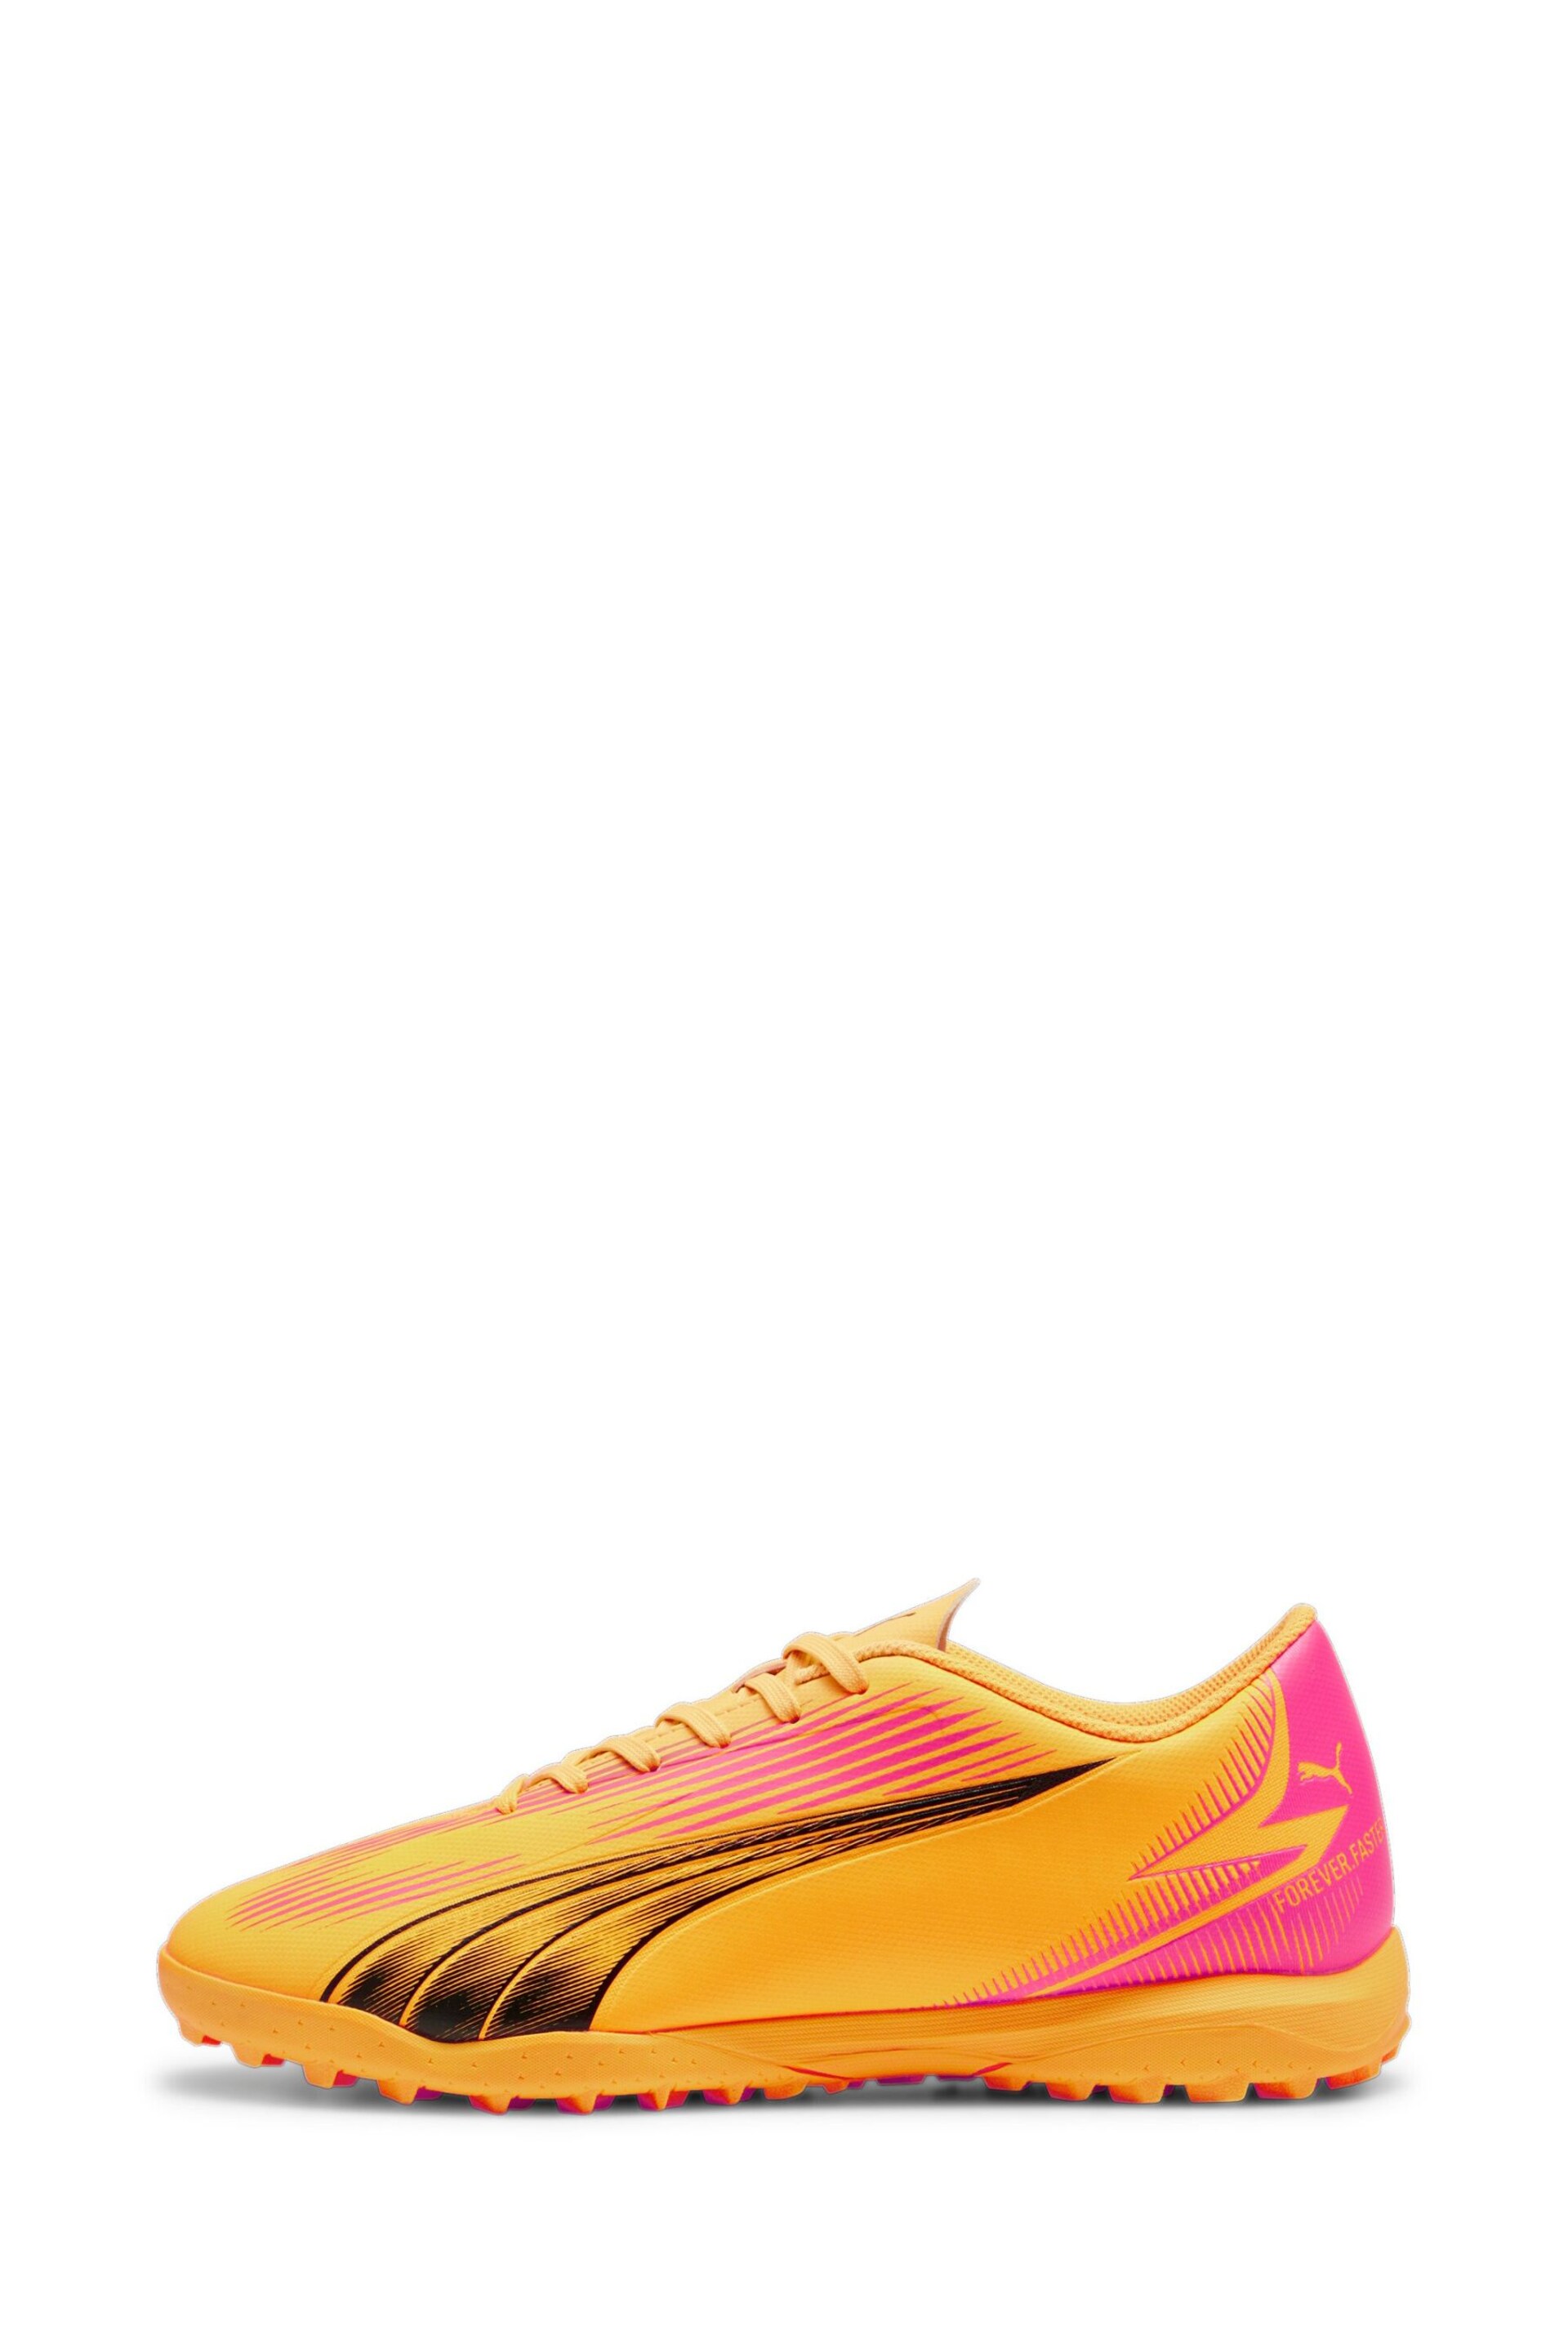 Puma Orange Mens Ultra Play TT Football Boots - Image 2 of 6